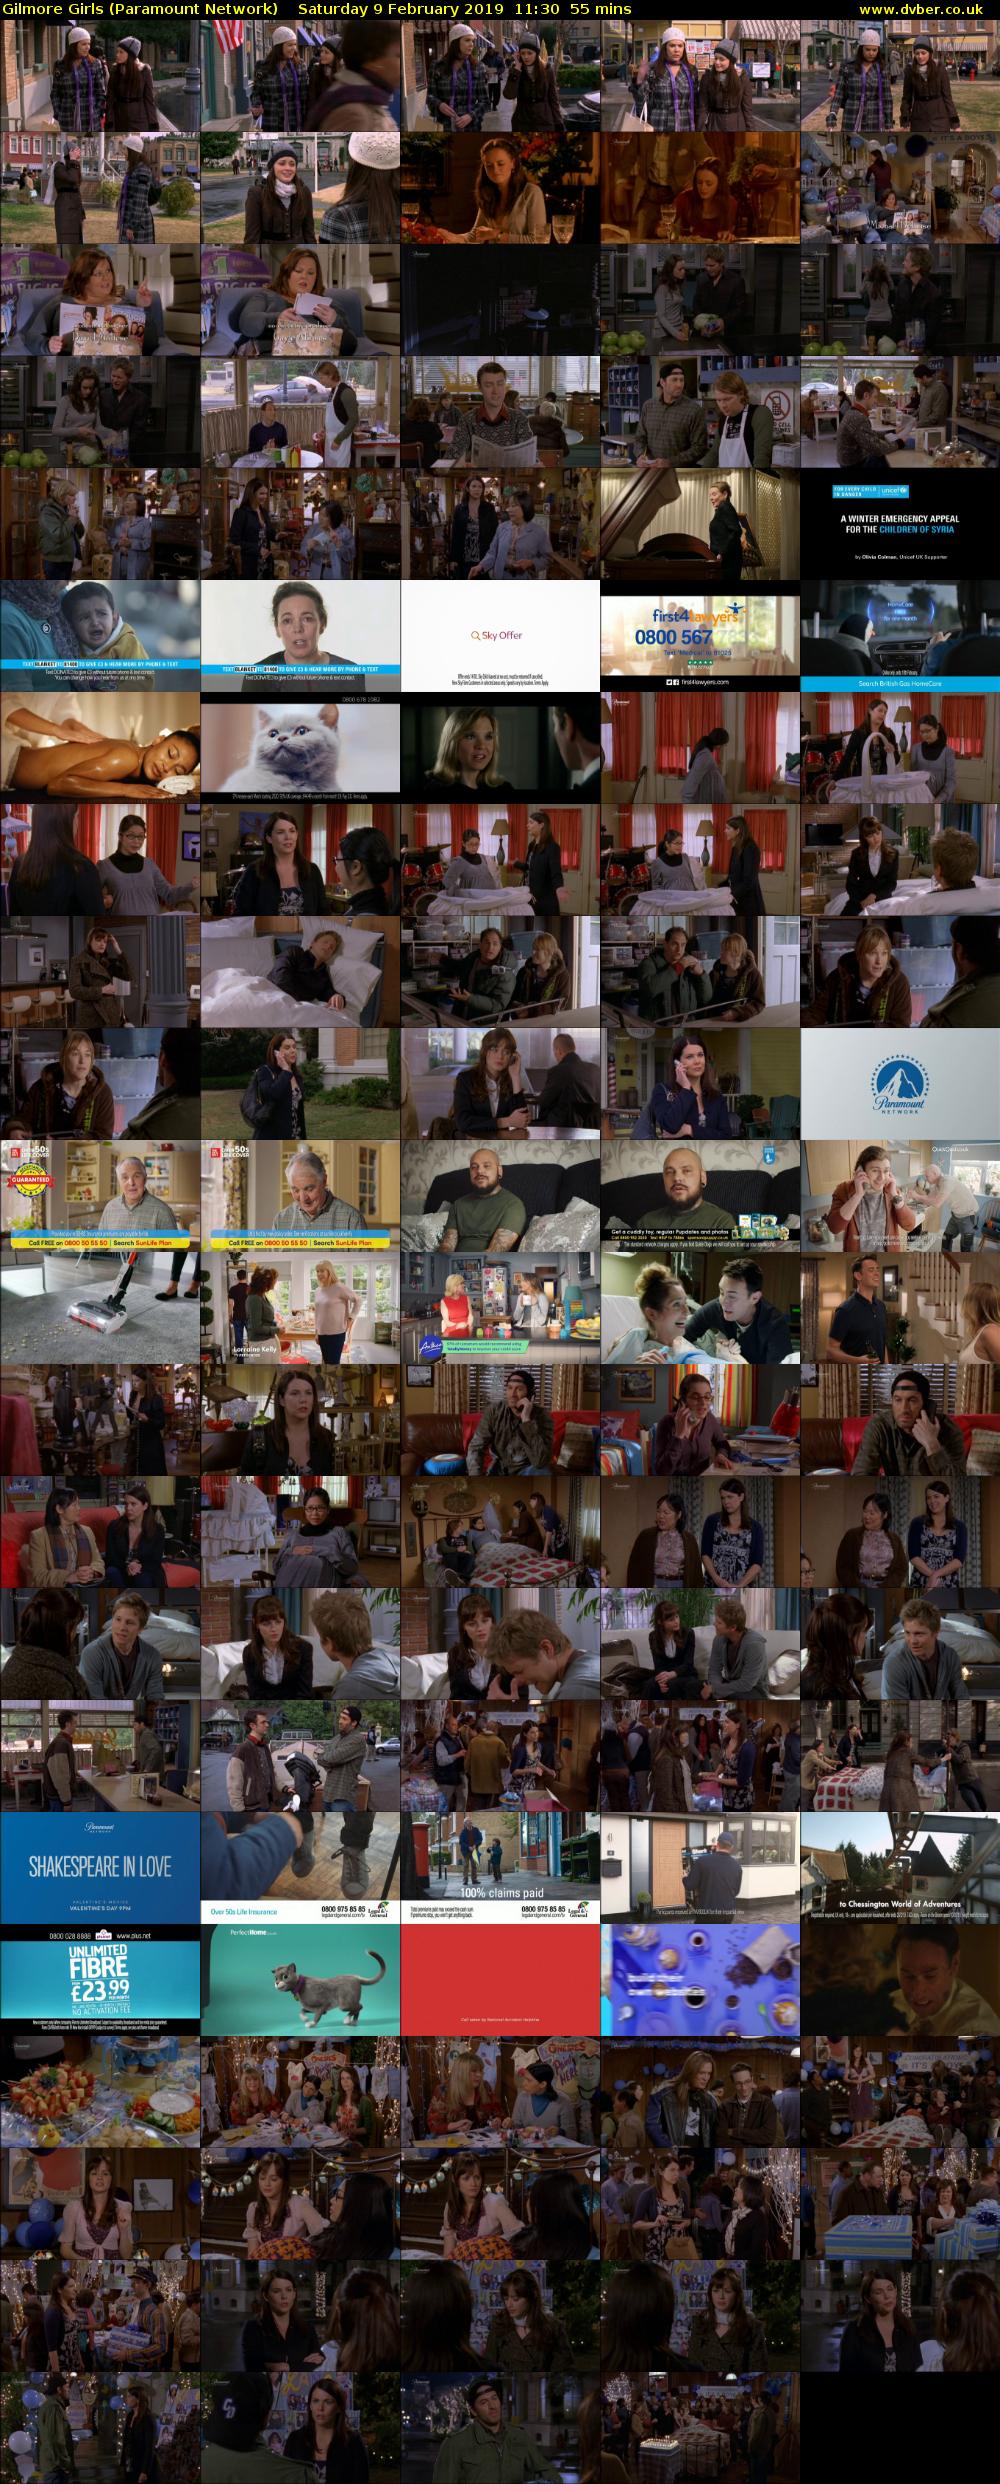 Gilmore Girls (Paramount Network) Saturday 9 February 2019 11:30 - 12:25